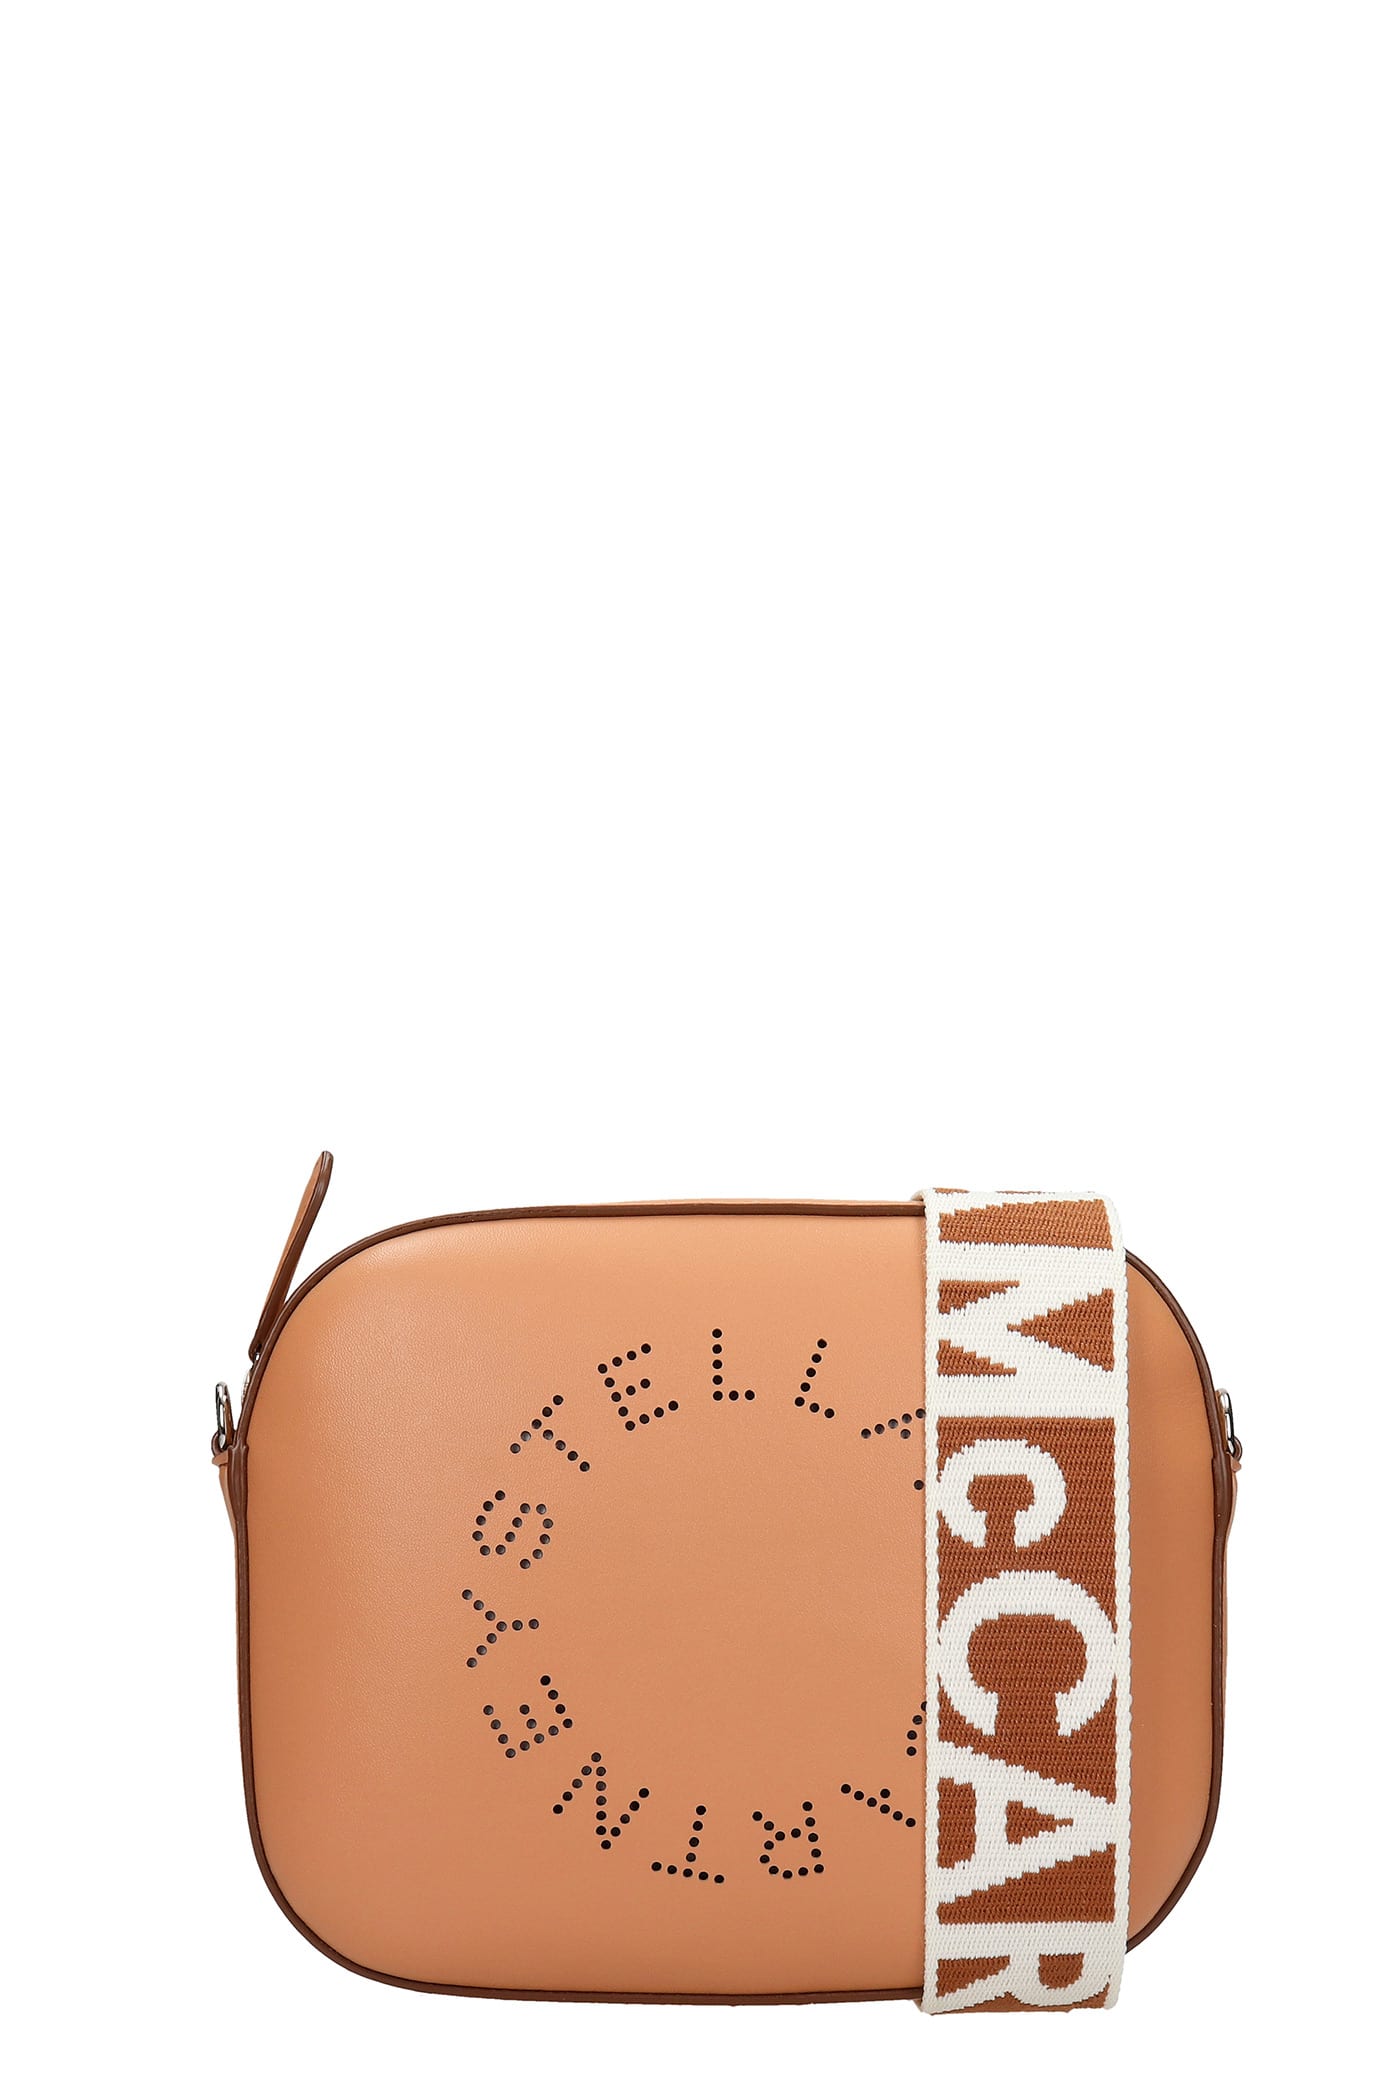 Stella McCartney Shoulder Bag In Leather Color Faux Leather